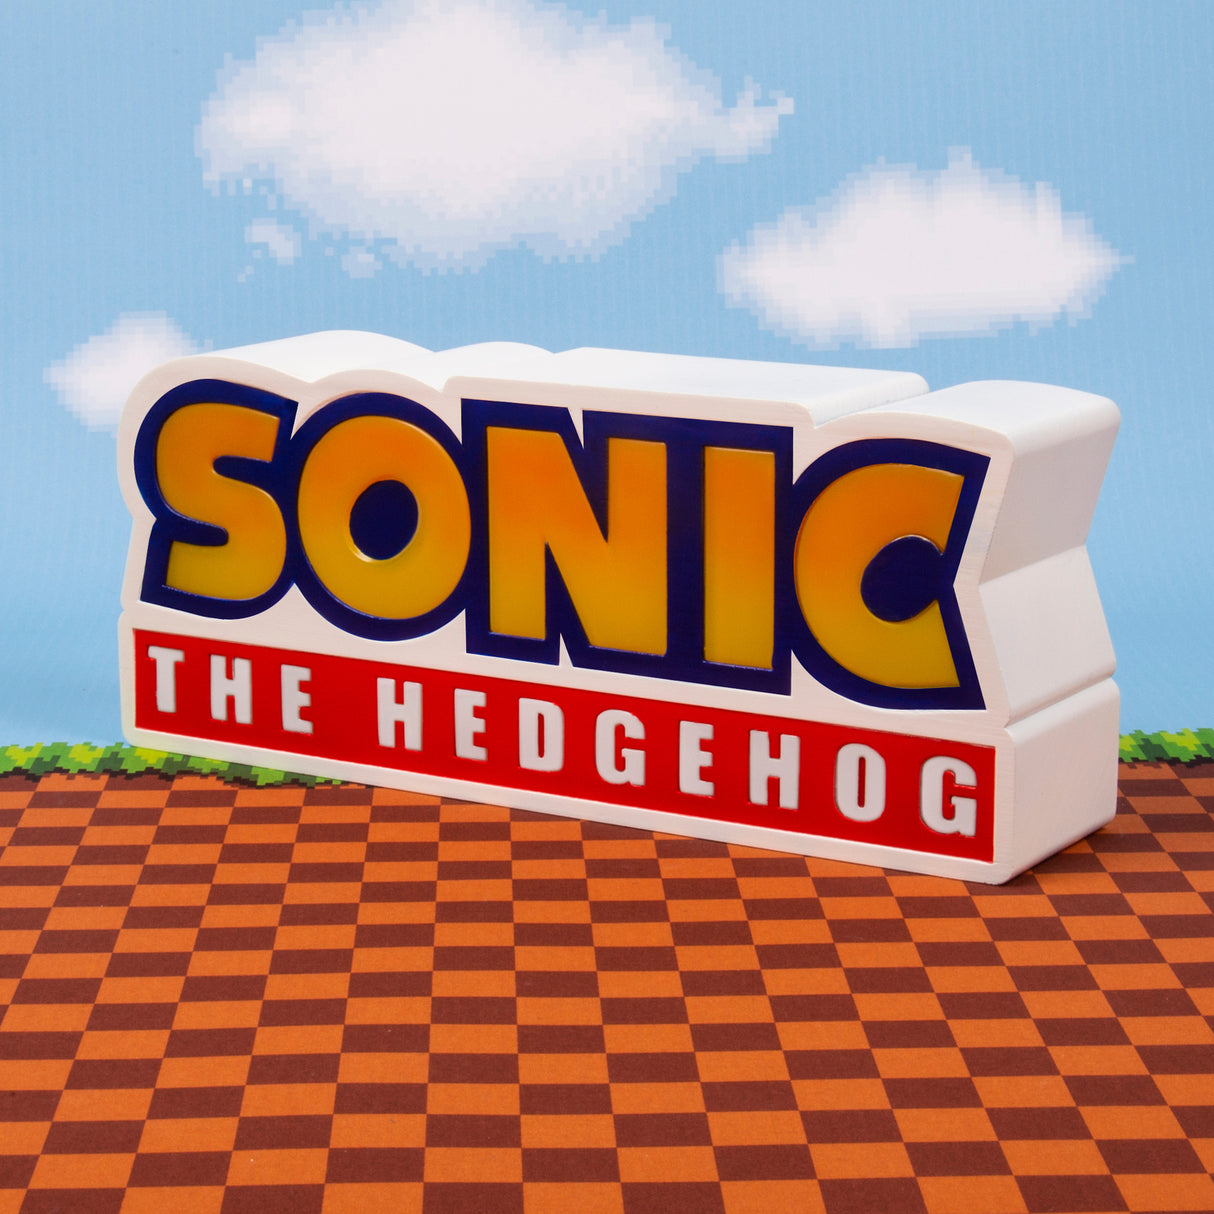 Sonic The Hedgehog Logo Dekolampe